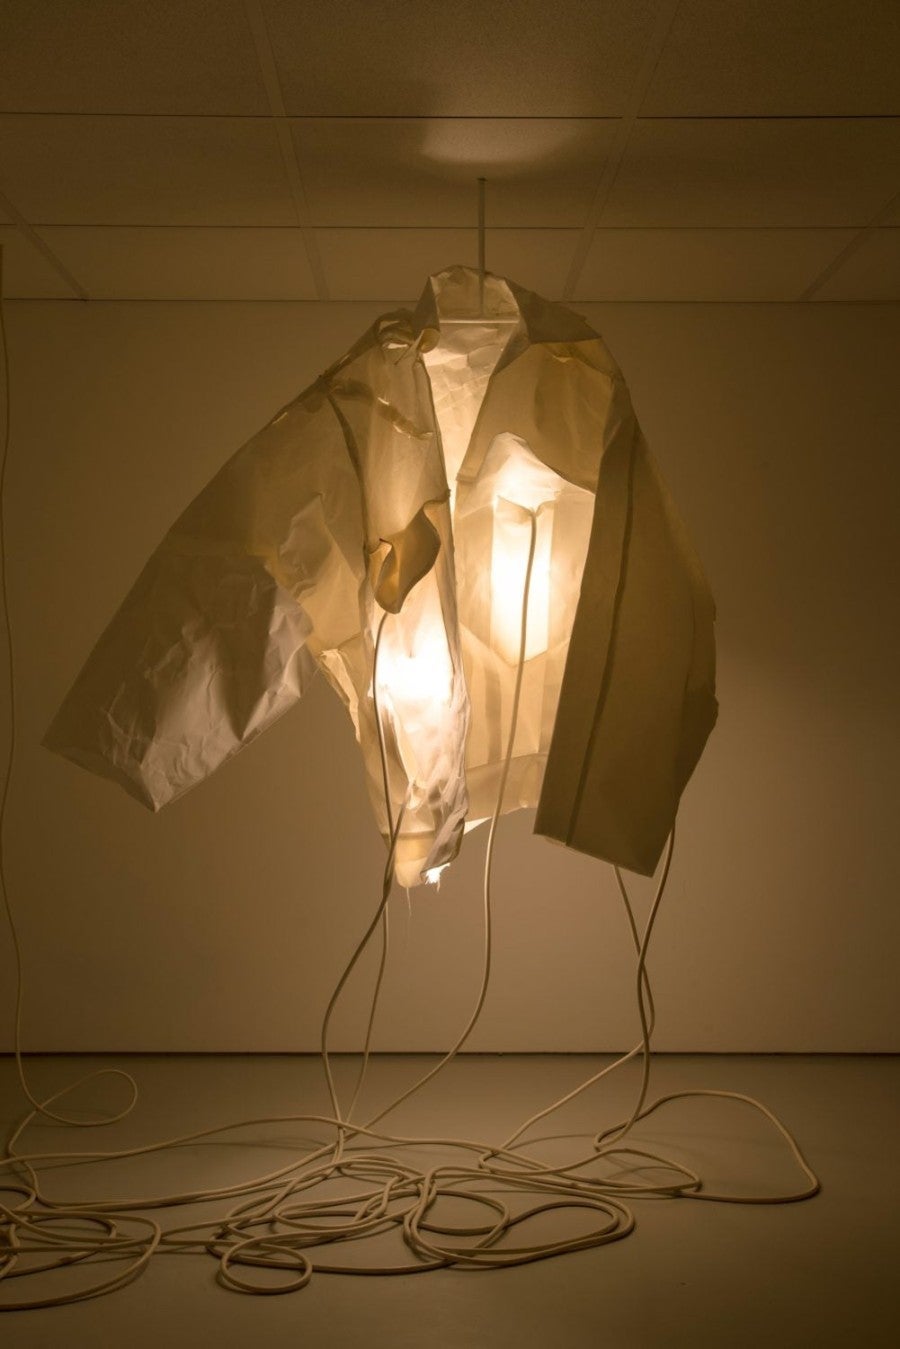 Mélanie Matranga, My Shape, 2018. Paper, lights, steel, 115 x 120 x 70 cm. Exhibition view, "Sorry", High Art, Paris, 2018.